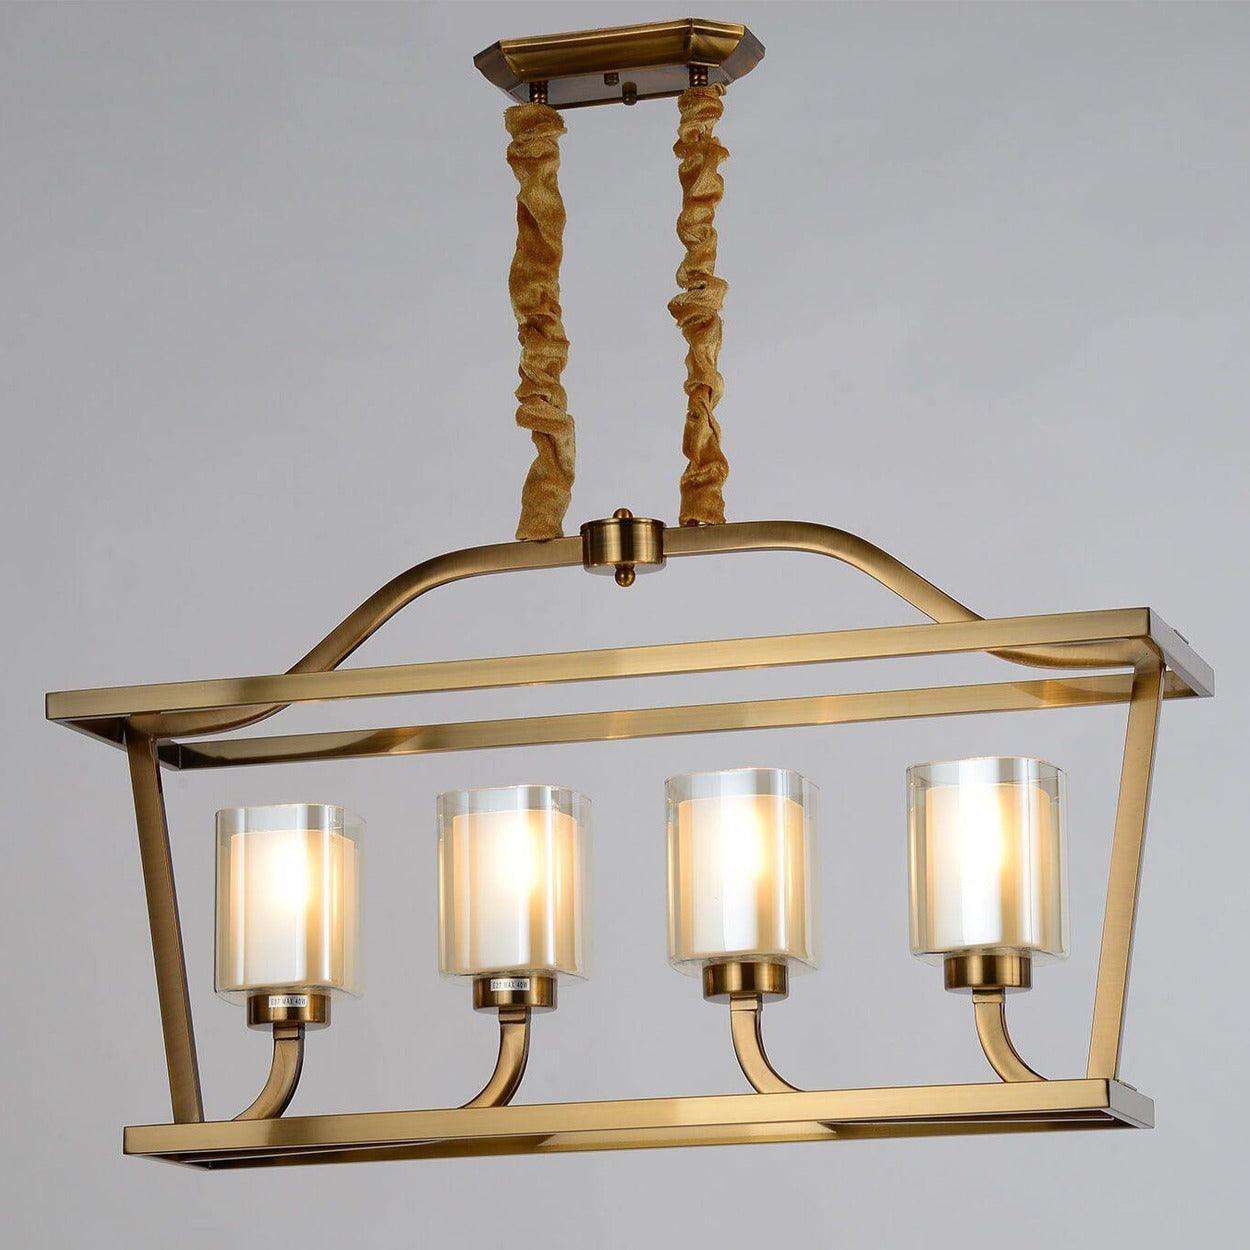 ANKUR RECTANGLE 4 LAMP CASA ANTIQUE BRASS METAL WITH GLASS CHANDELIER - Ankur Lighting